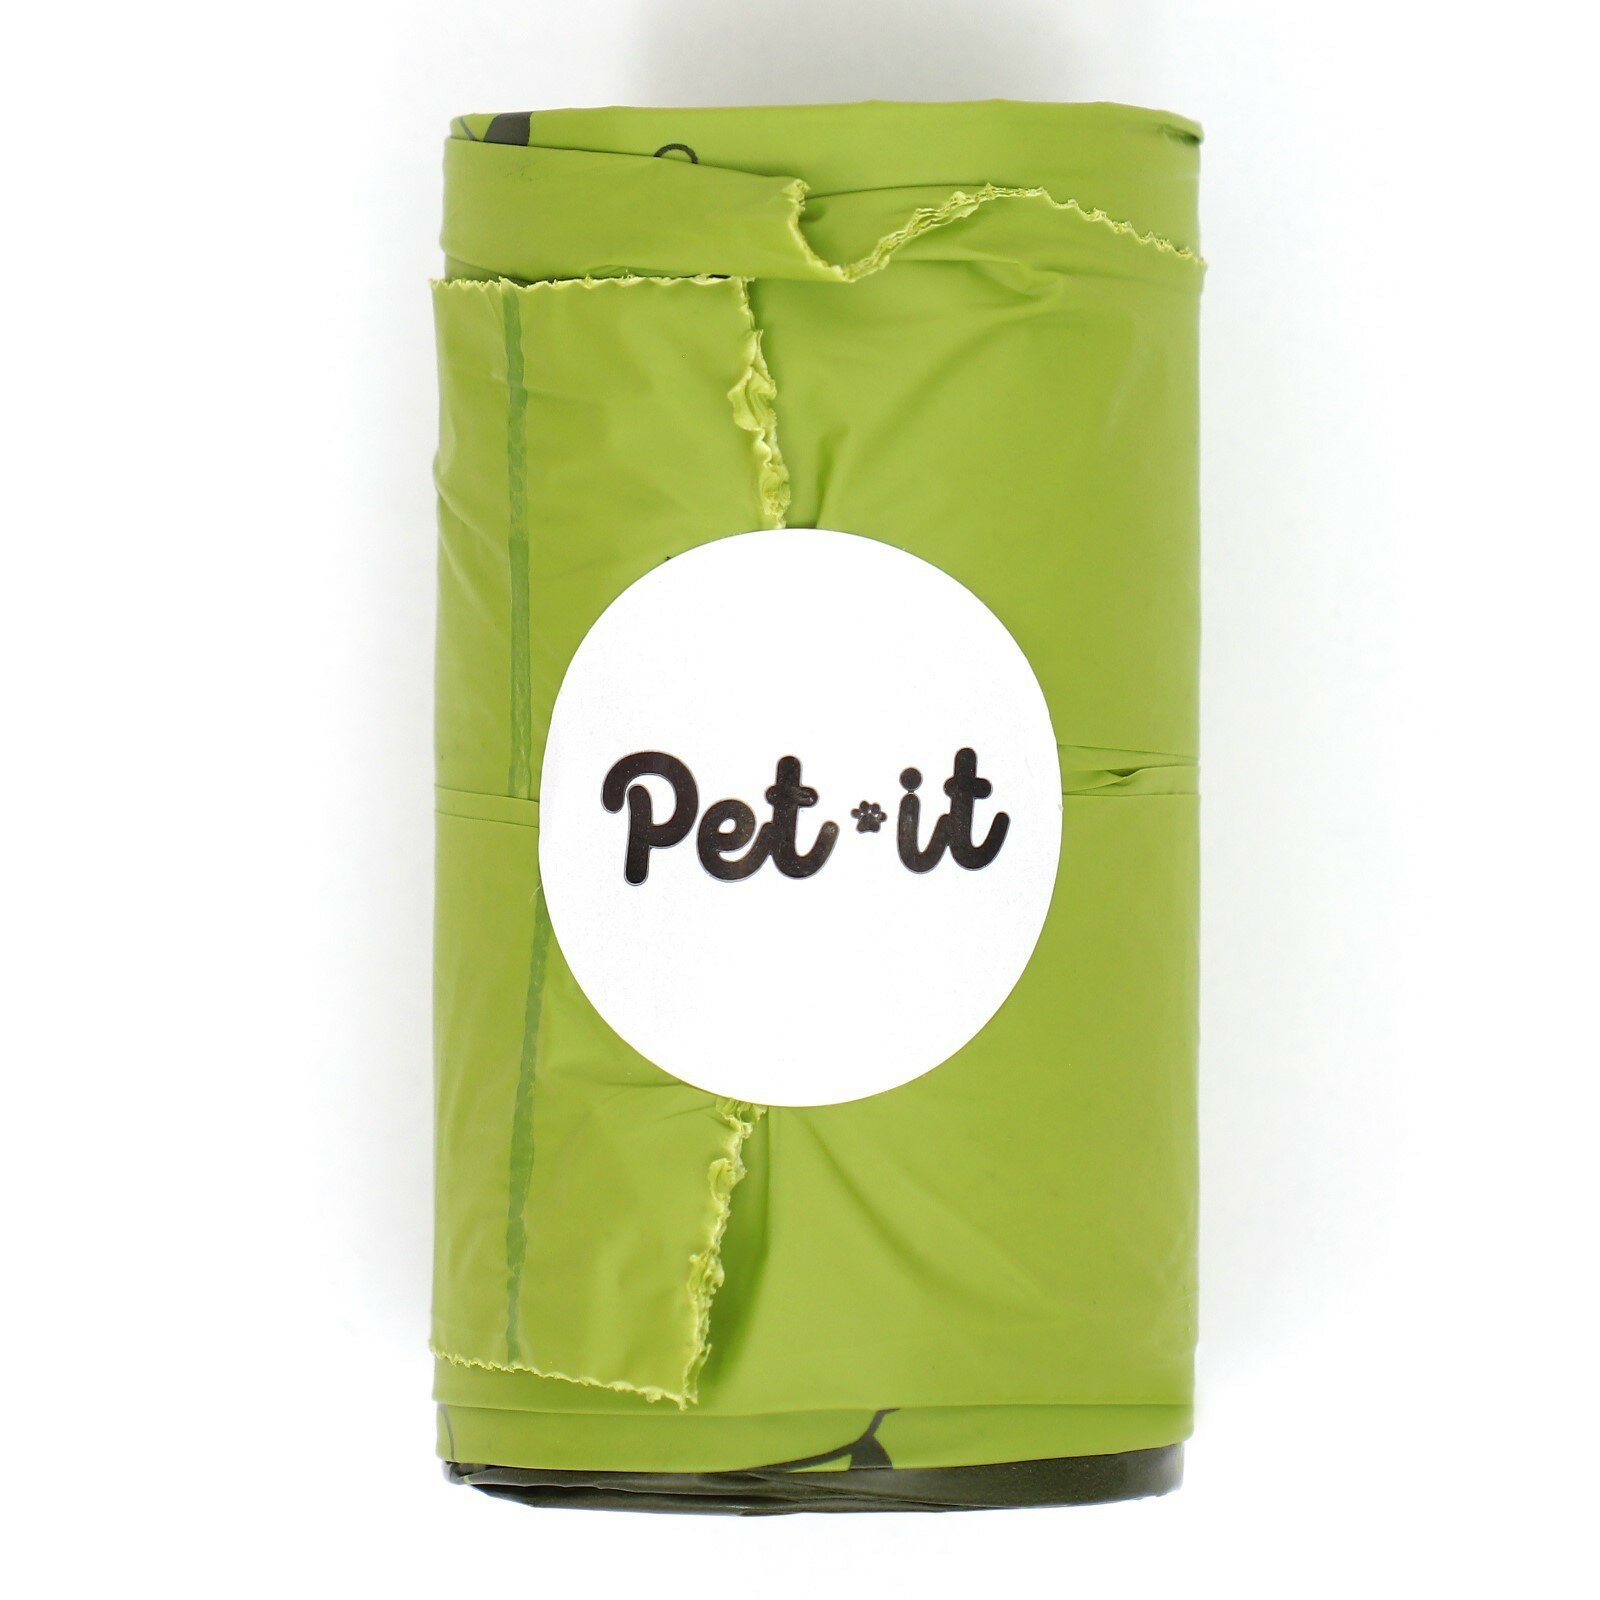 Pet-it пакеты для выгула собак Compostable, 12+11x36, 4 рул. по 15 шт. (1шт.)